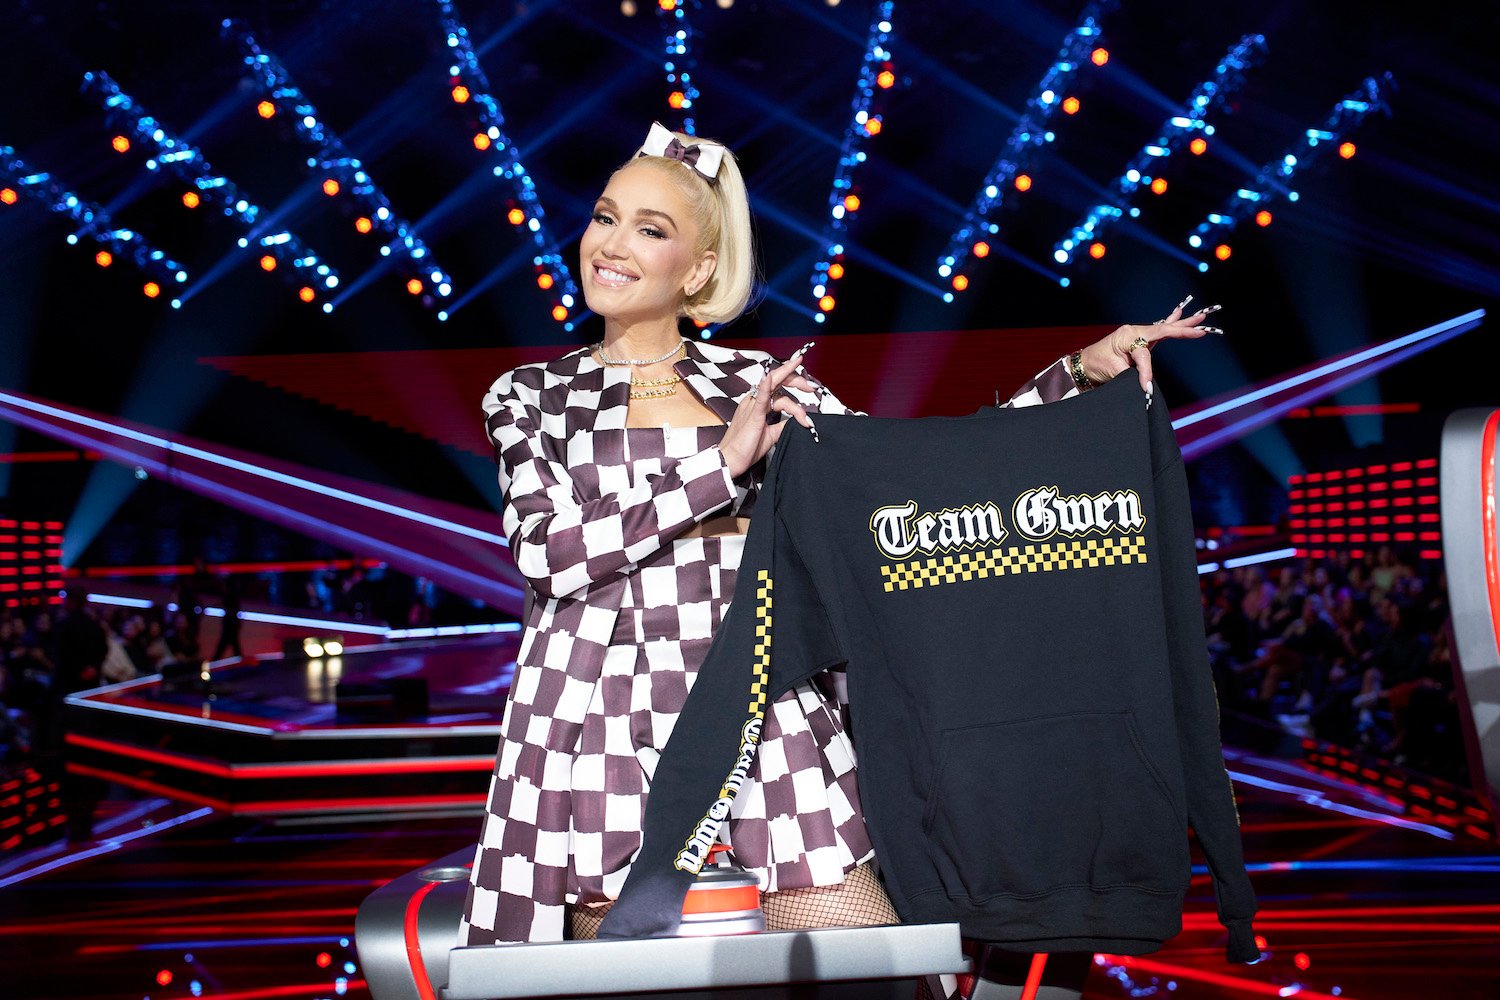 'The Voice' Season 24 coach Gwen Stefani holding up a 'Team Gwen' shirt and smiling